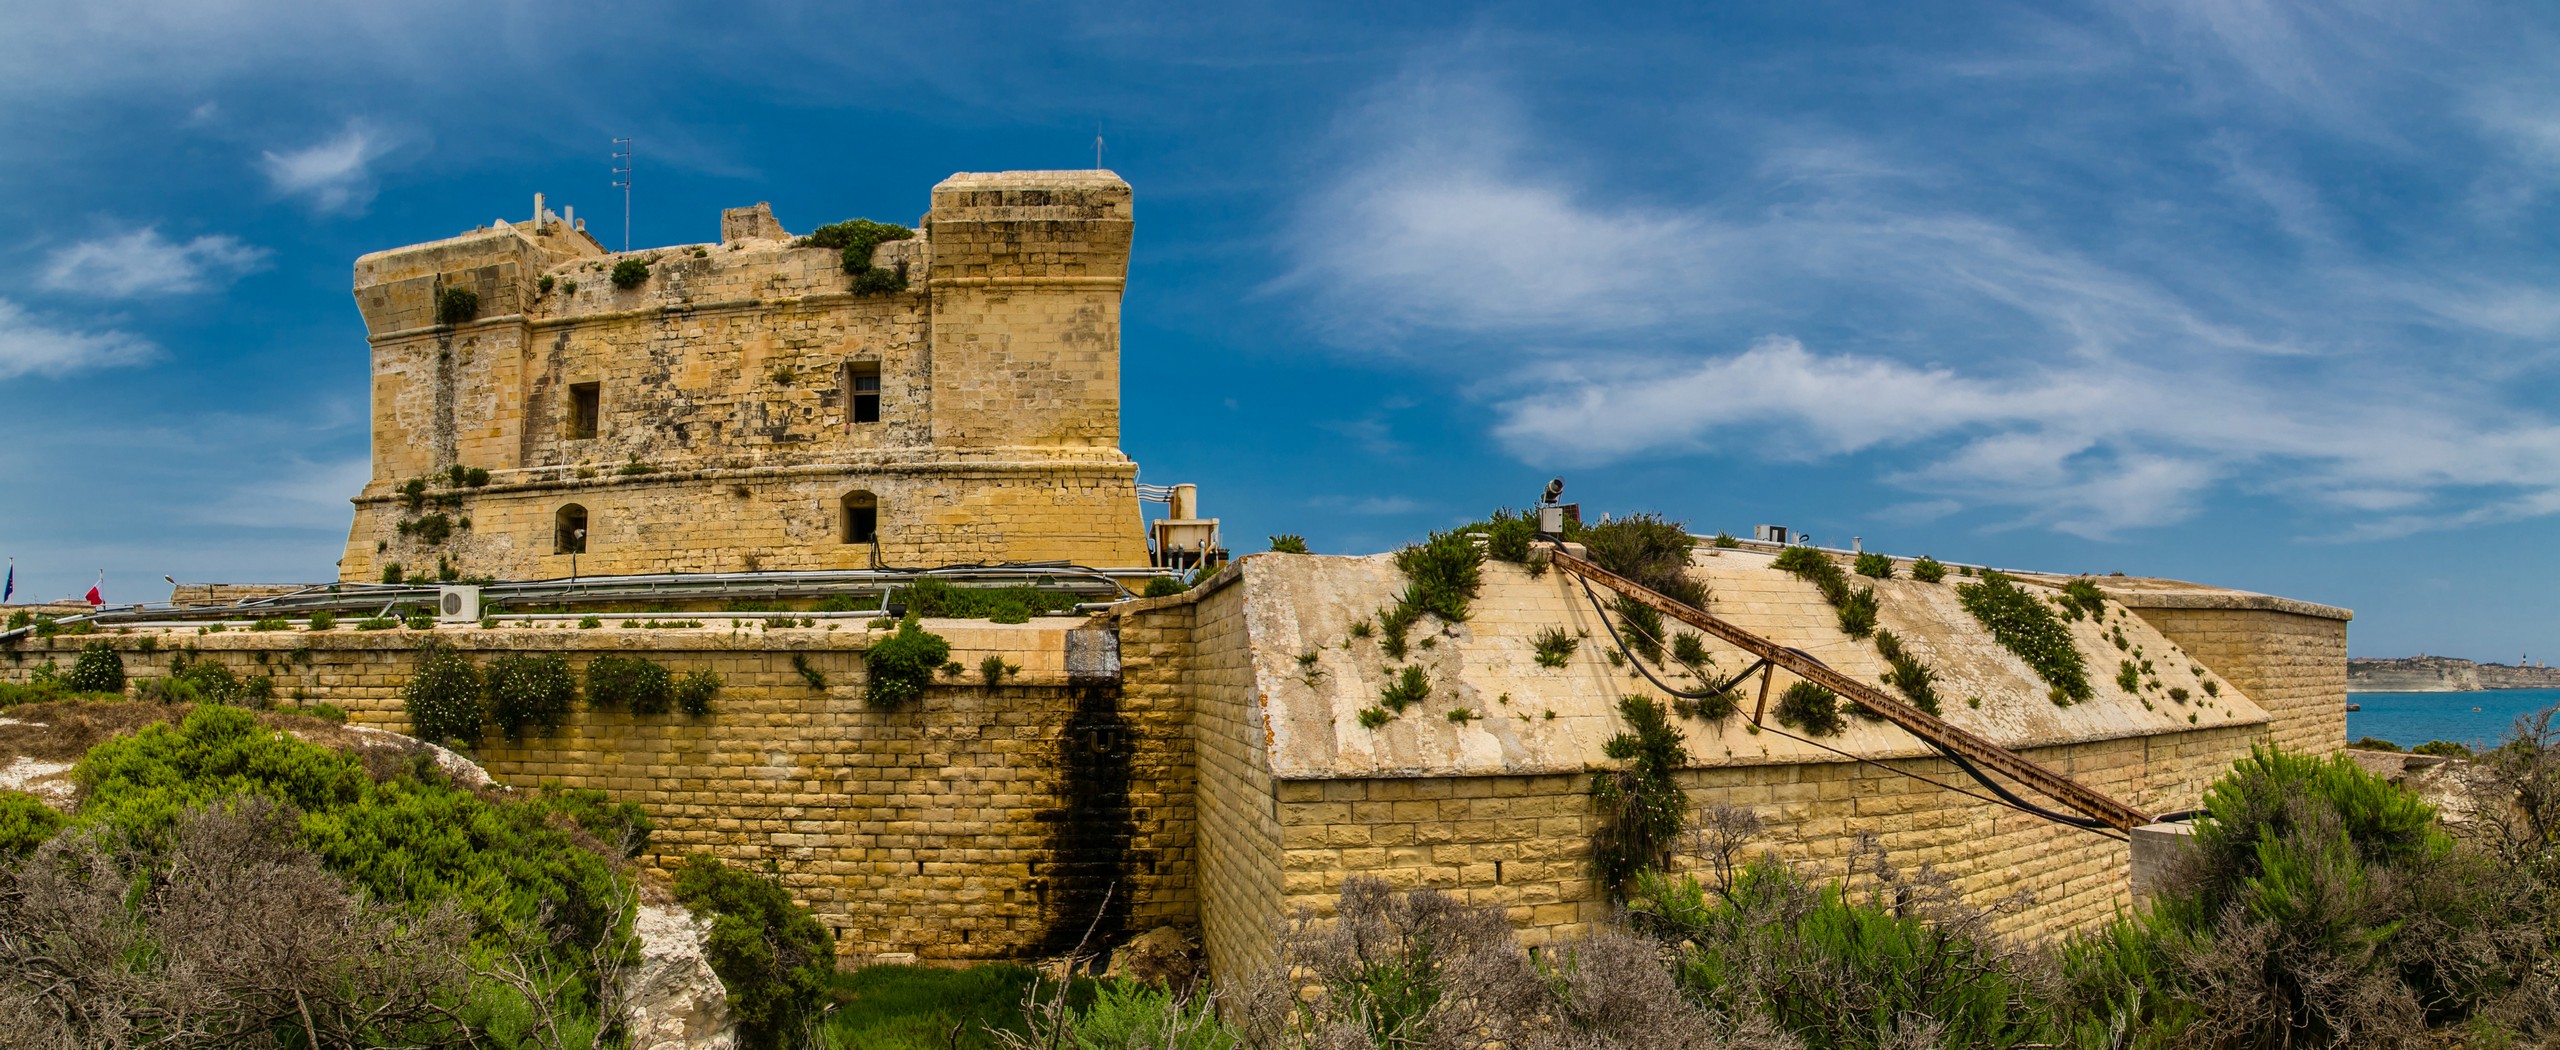 Fort Benghisa 4